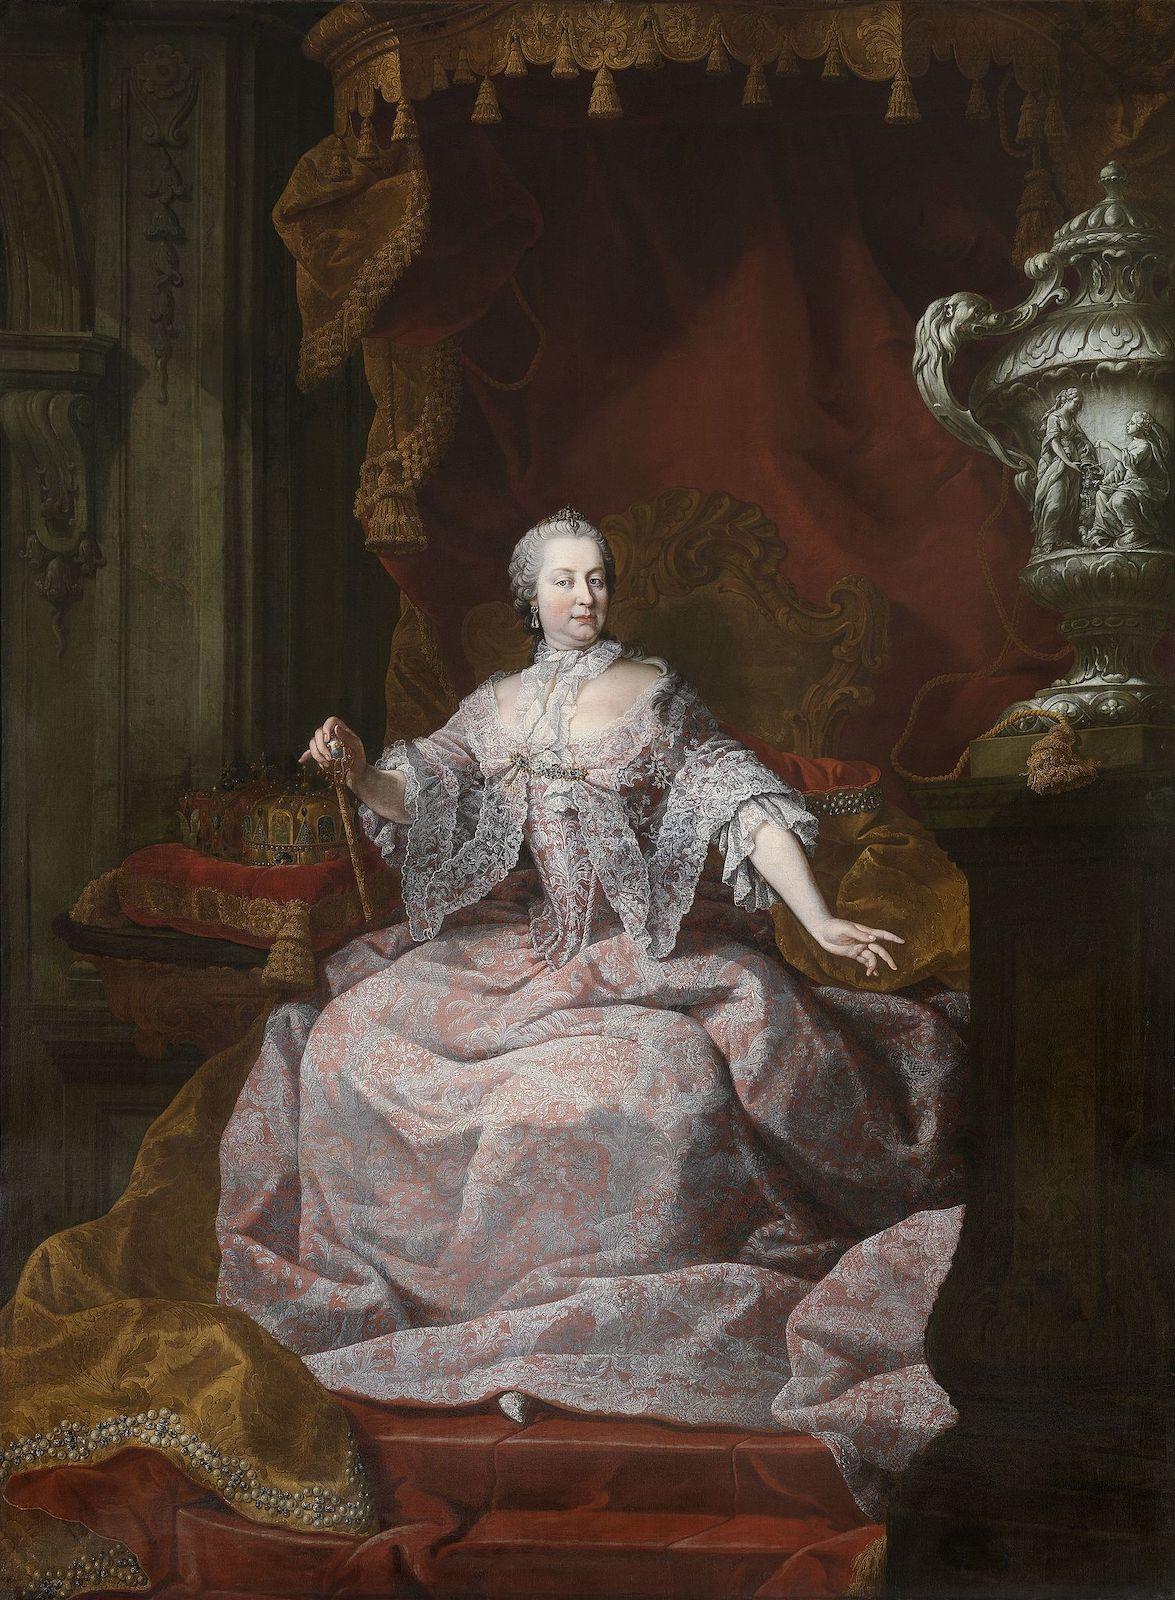 Matthias de Visch after Martin van Meytens, 1749, Portrait of Empress Maria Theresa, oil on canvas, Musea Brugge.